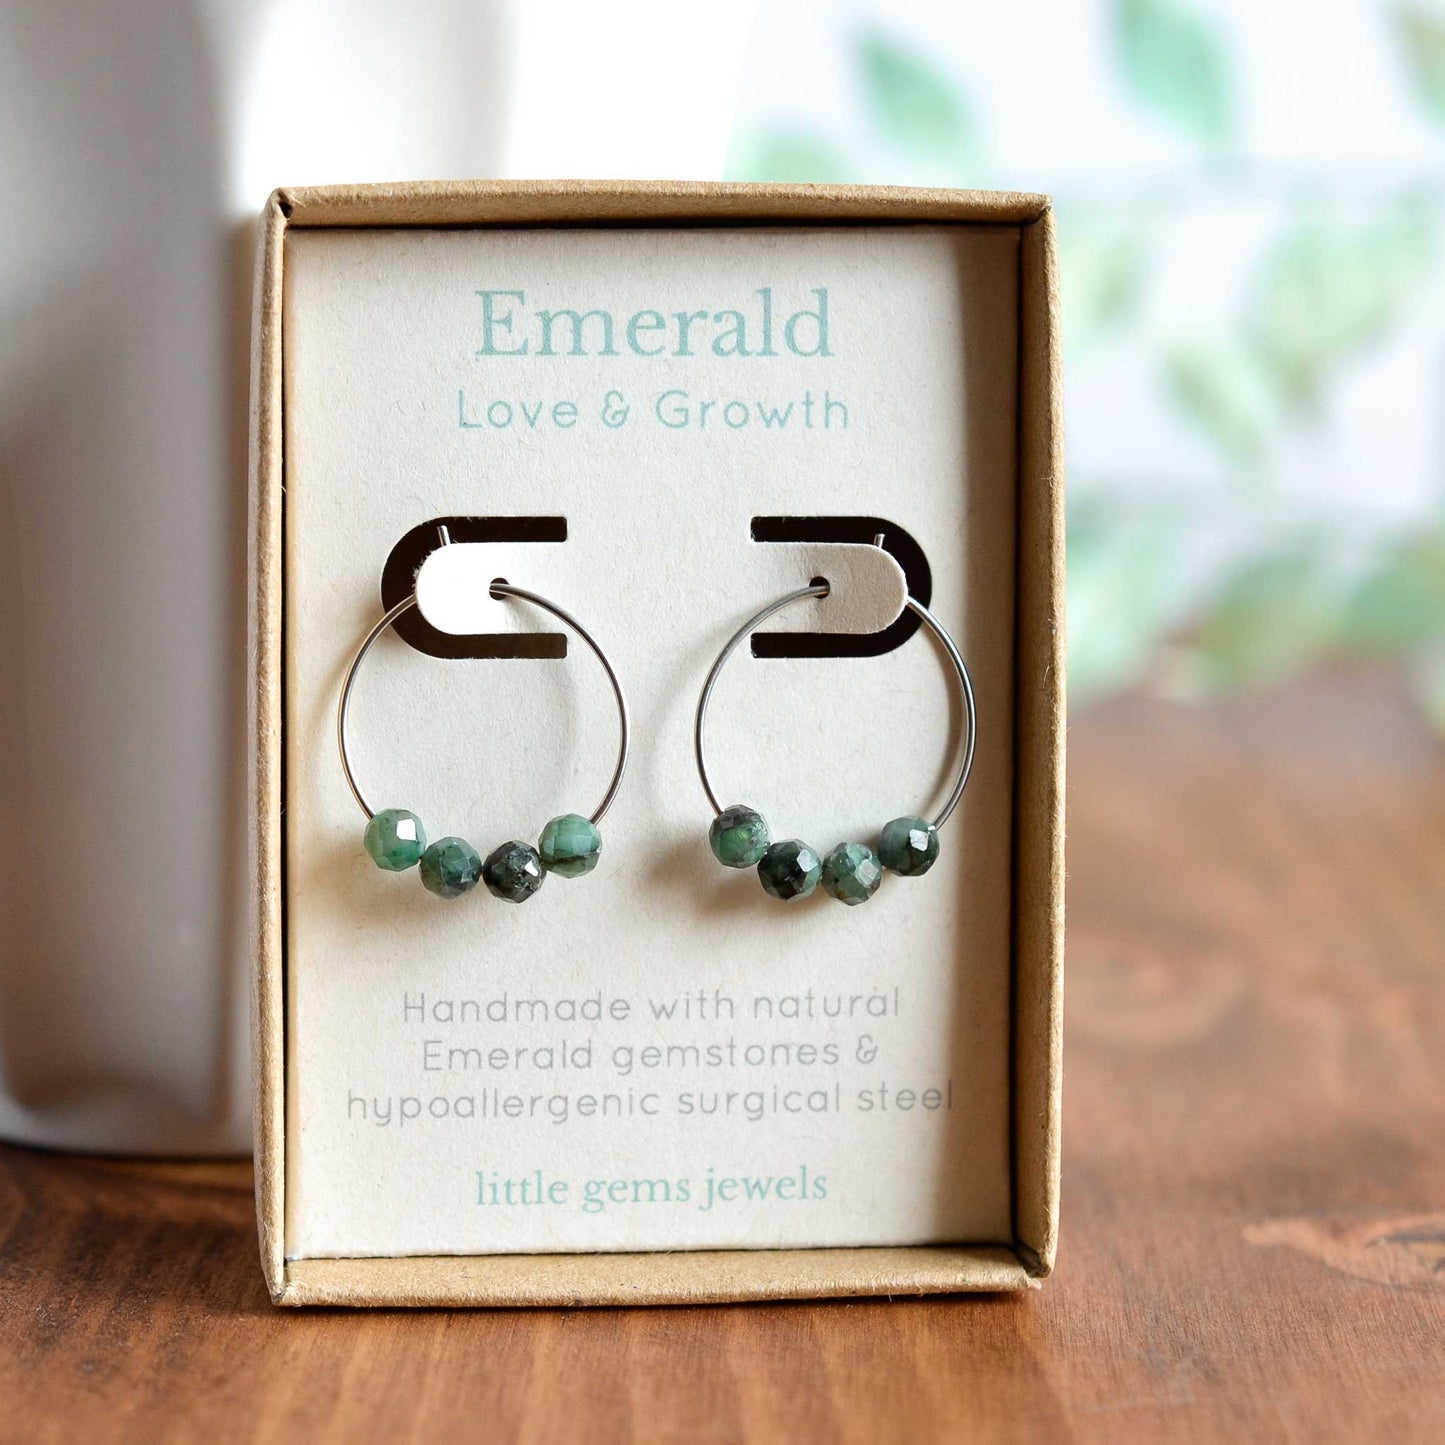 Emerald gemstone hoop earrings in eco friendly gift box